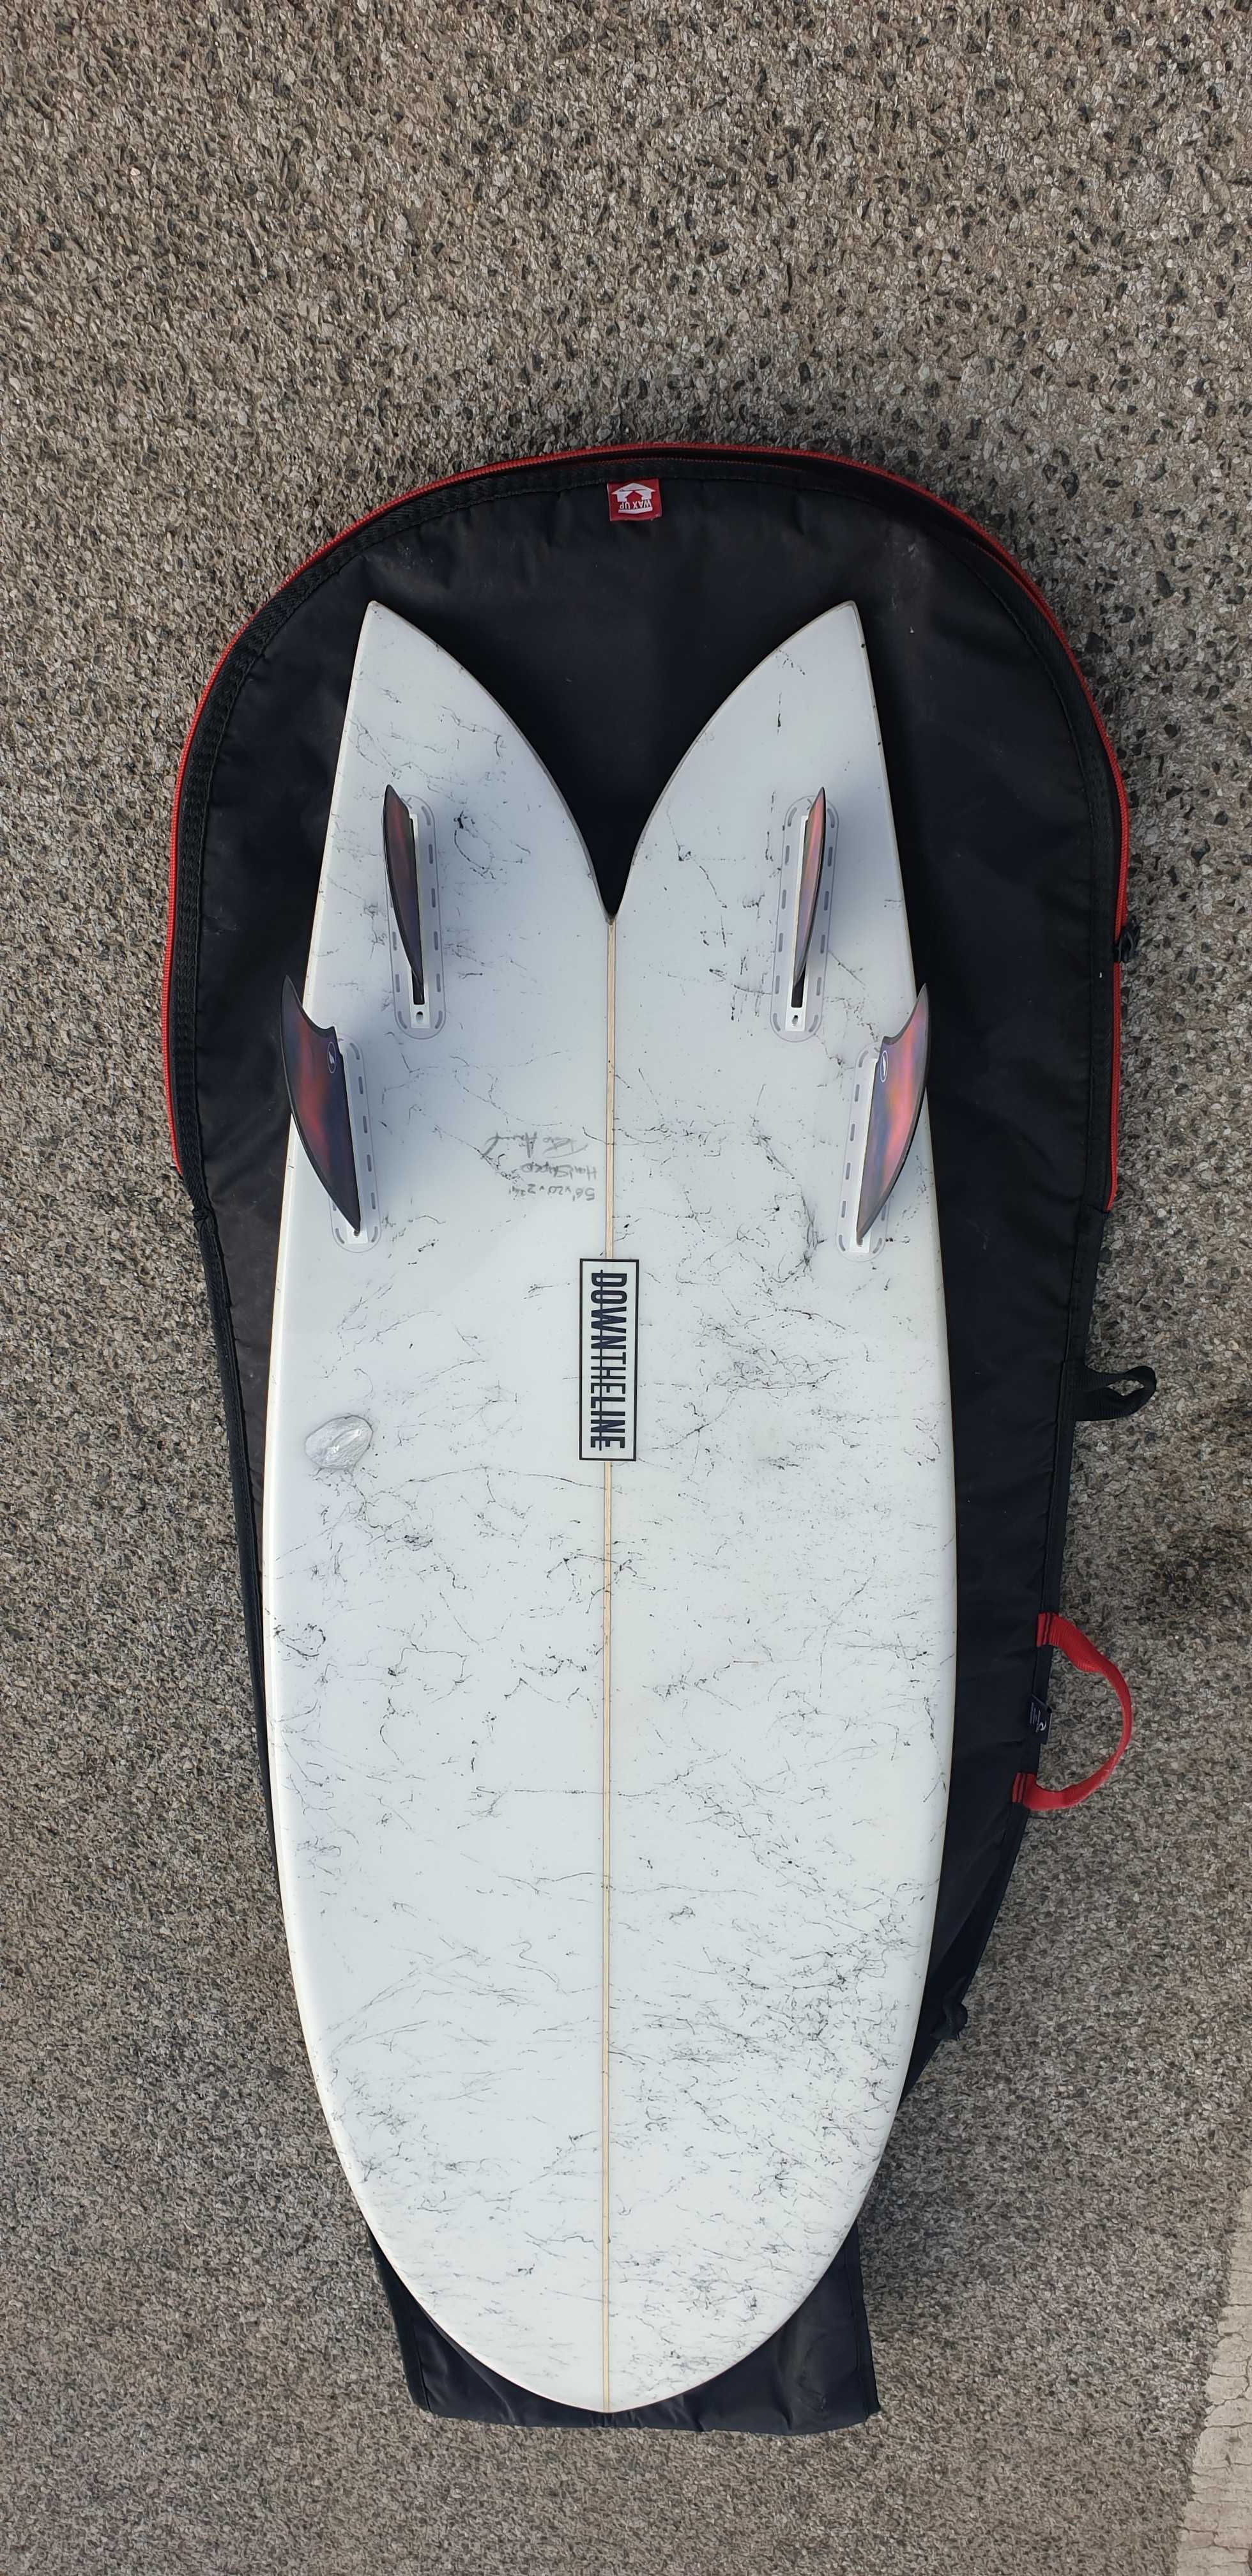 Prancha de surf hand shape fish5.6 40l. icl. quad rob machado seminova